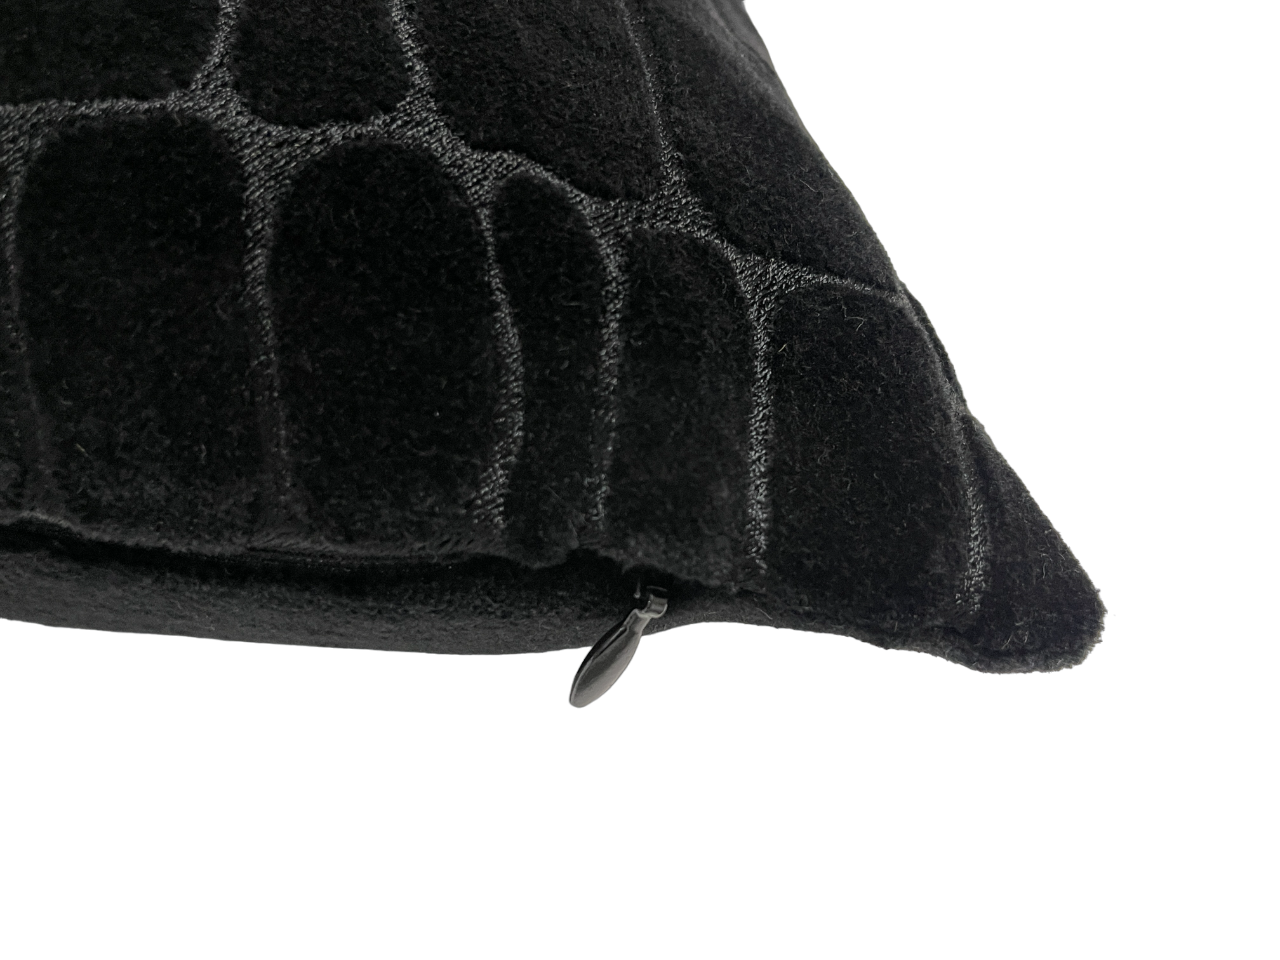 Wild Luxury Velvet Embroidered Black Cushion Cover